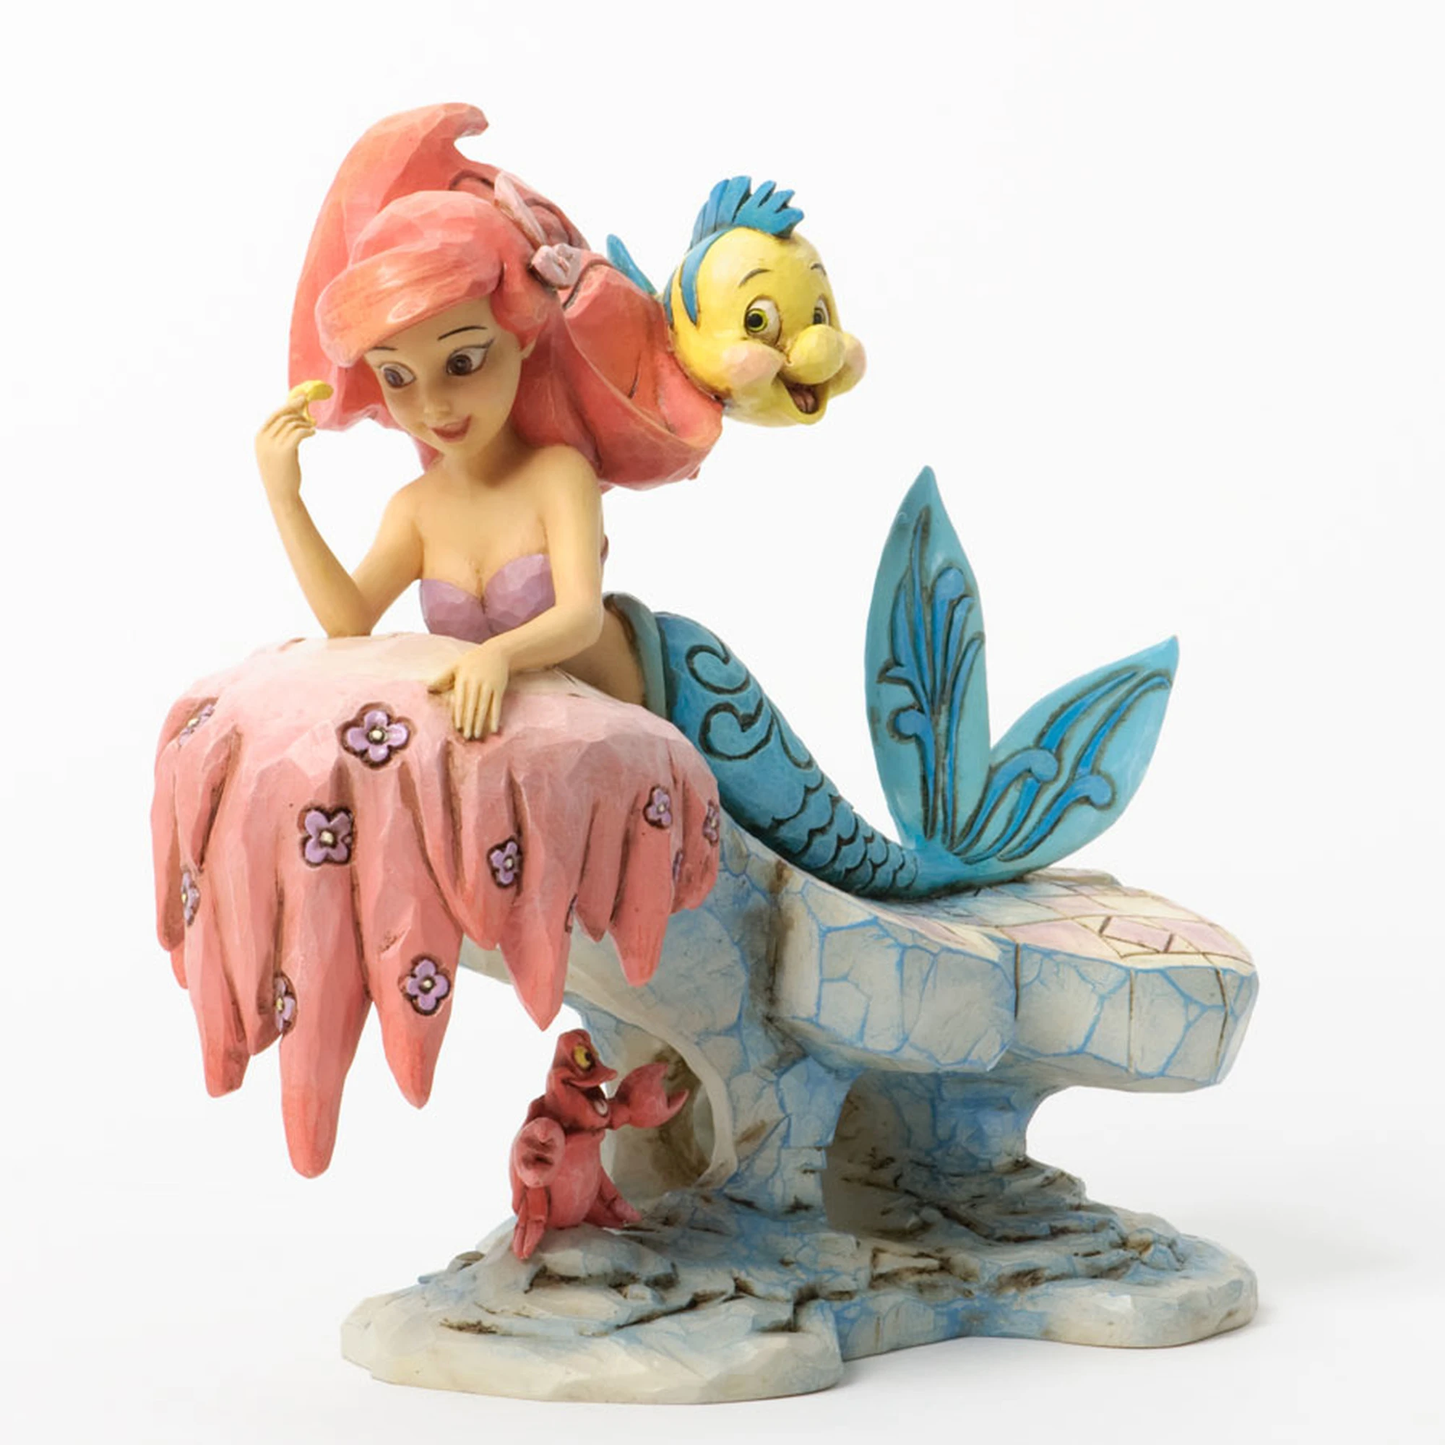 Enesco Jim Shore Disney Traditions The Little Mermaid Ariel 25th Anni. Collection Figure